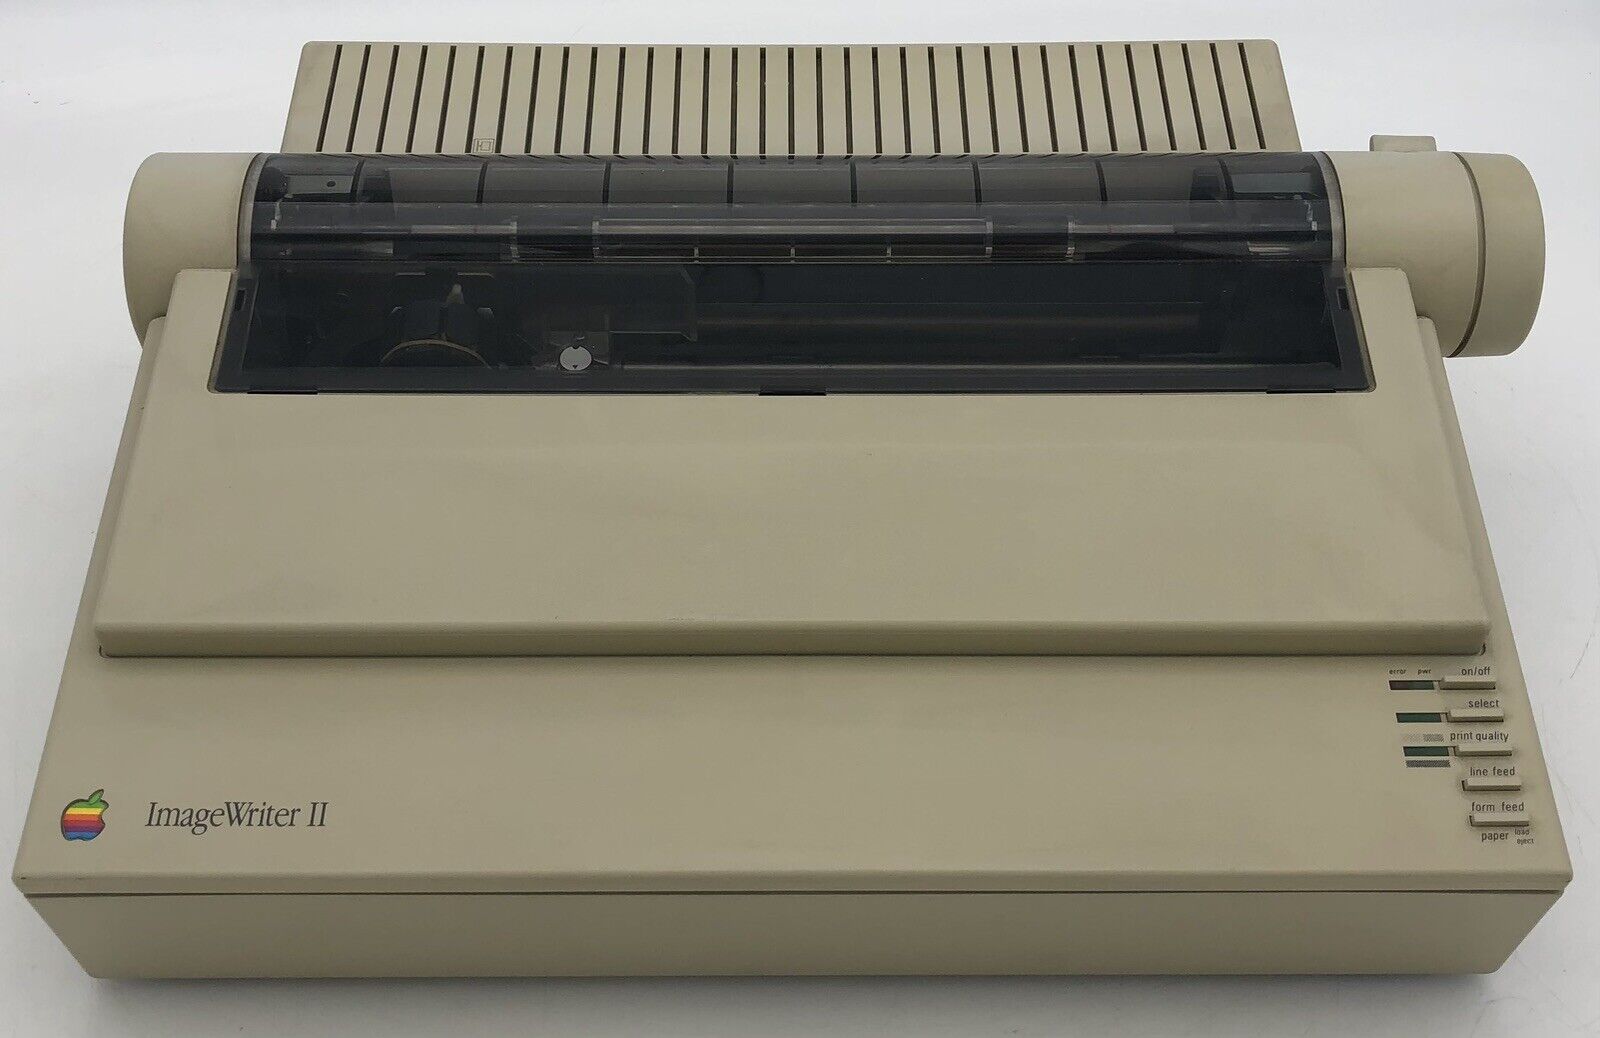 Vintage Apple ImageWriter II Computer Dot Matrix Printer A9M0320